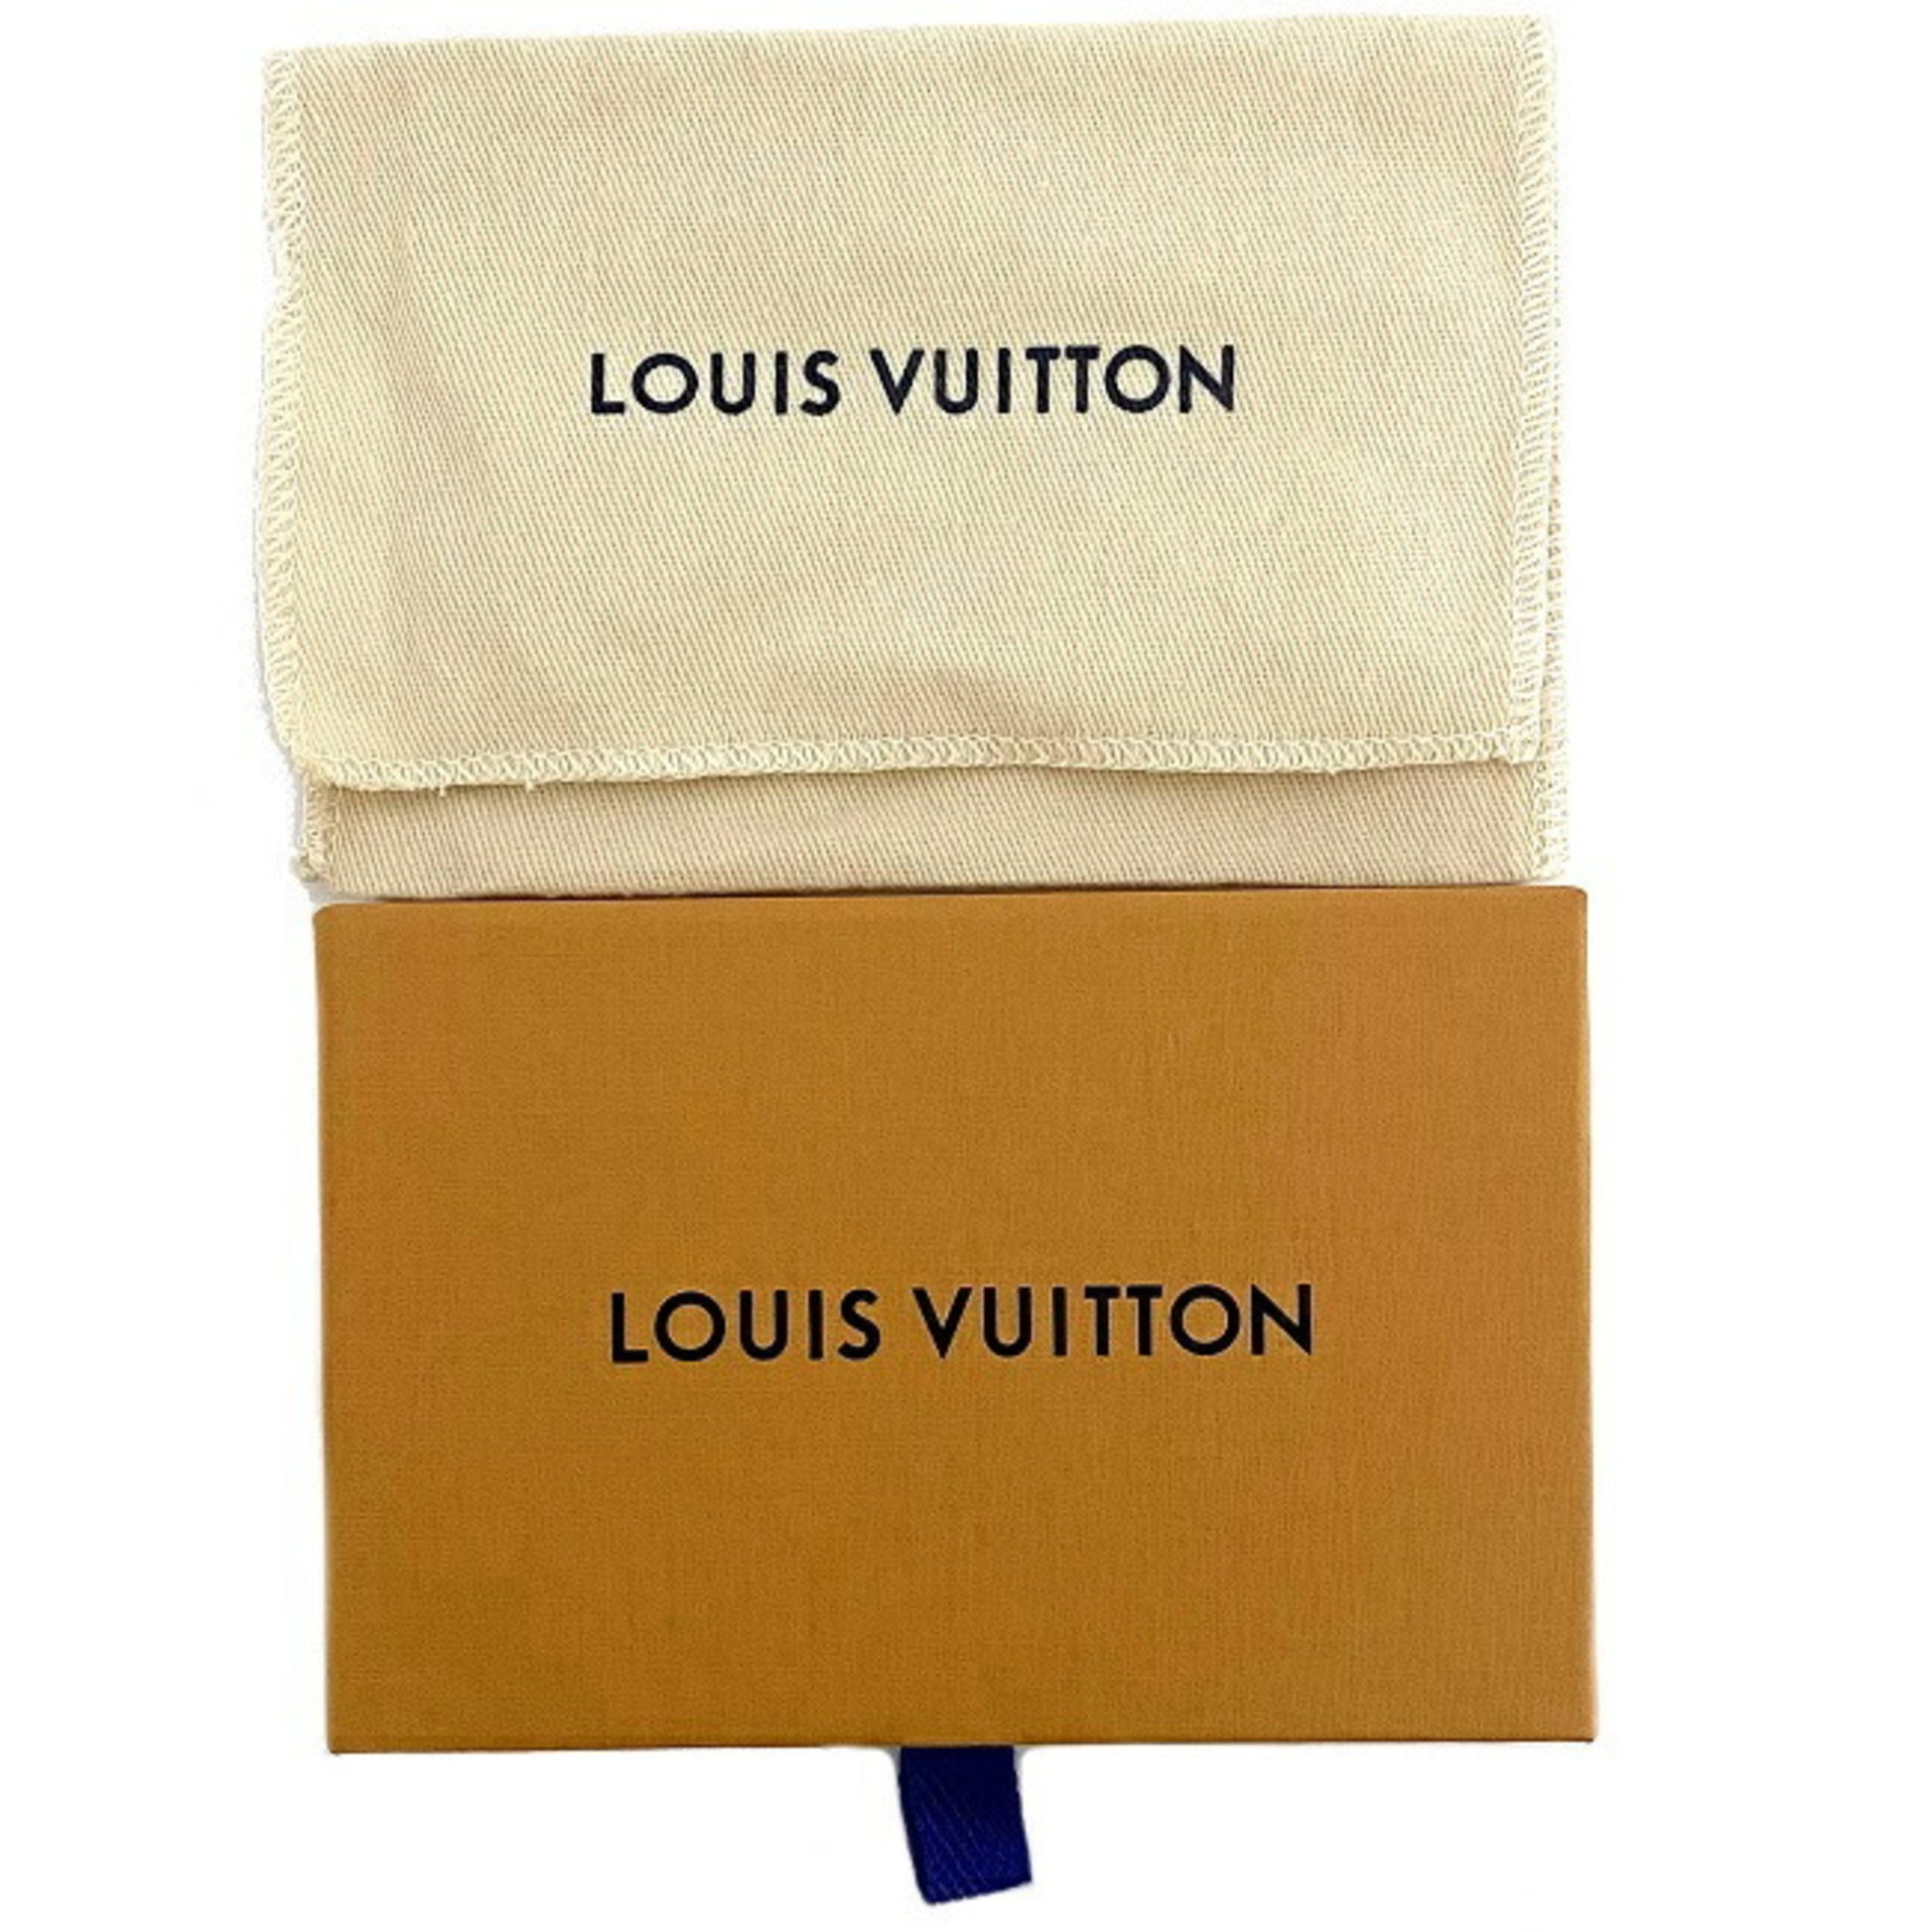 Louis-Vuitton-Bijoux-Sac-Chaine-Spring-Street-Bag-Charm-M68999